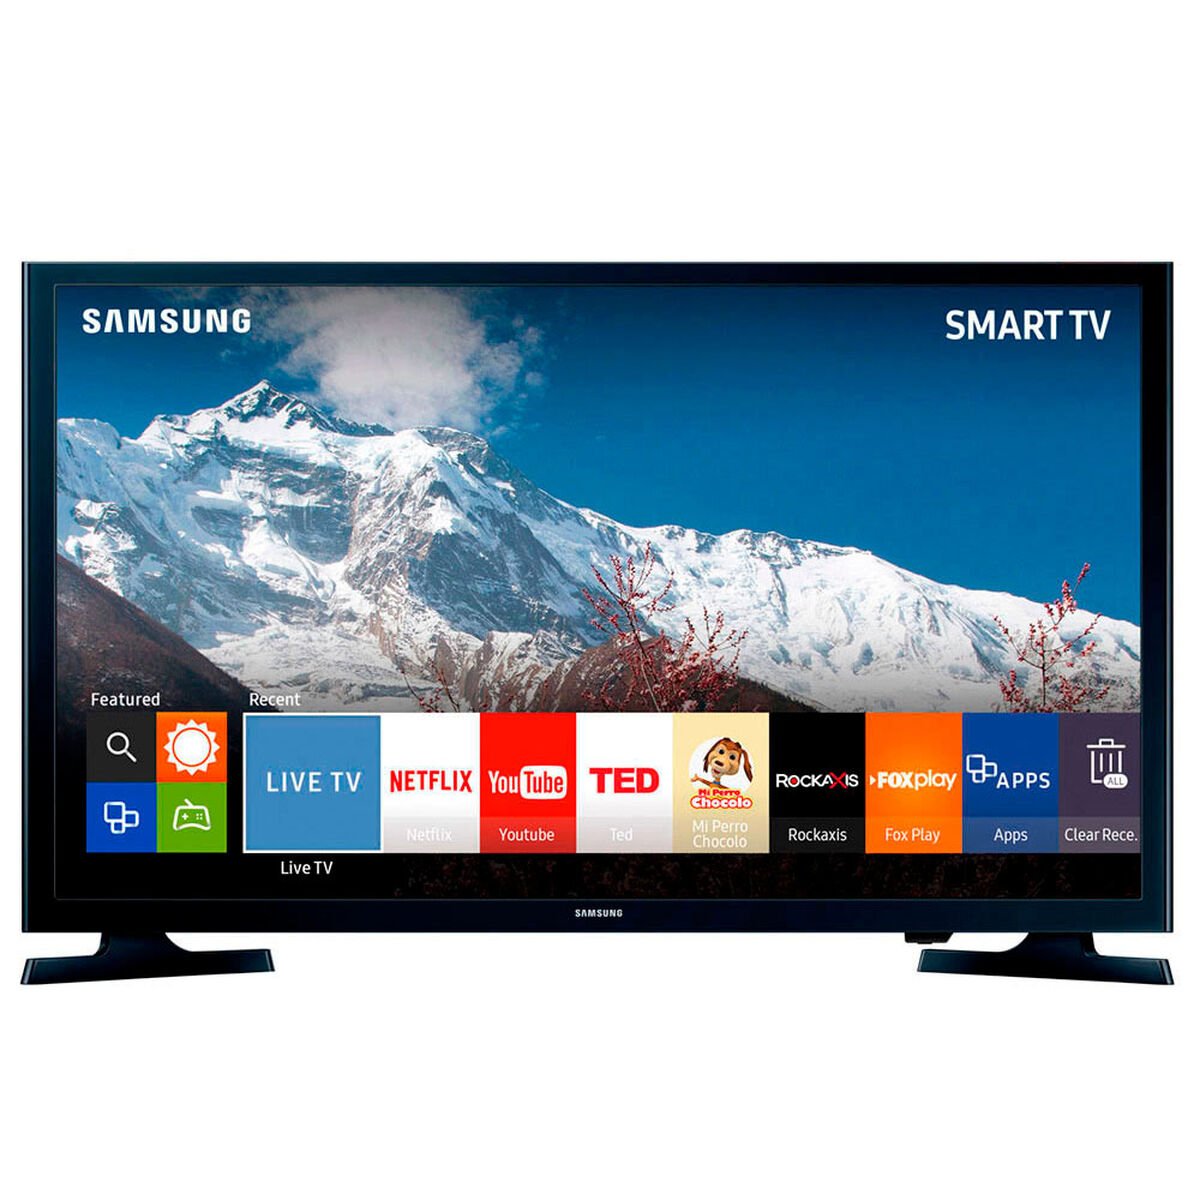 Самсунг смарт новый. Samsung led 32 Smart TV. Led телевизор Samsung ue40j5200. Samsung Smart TV 40. Самсунг led 40 смарт ТВ.